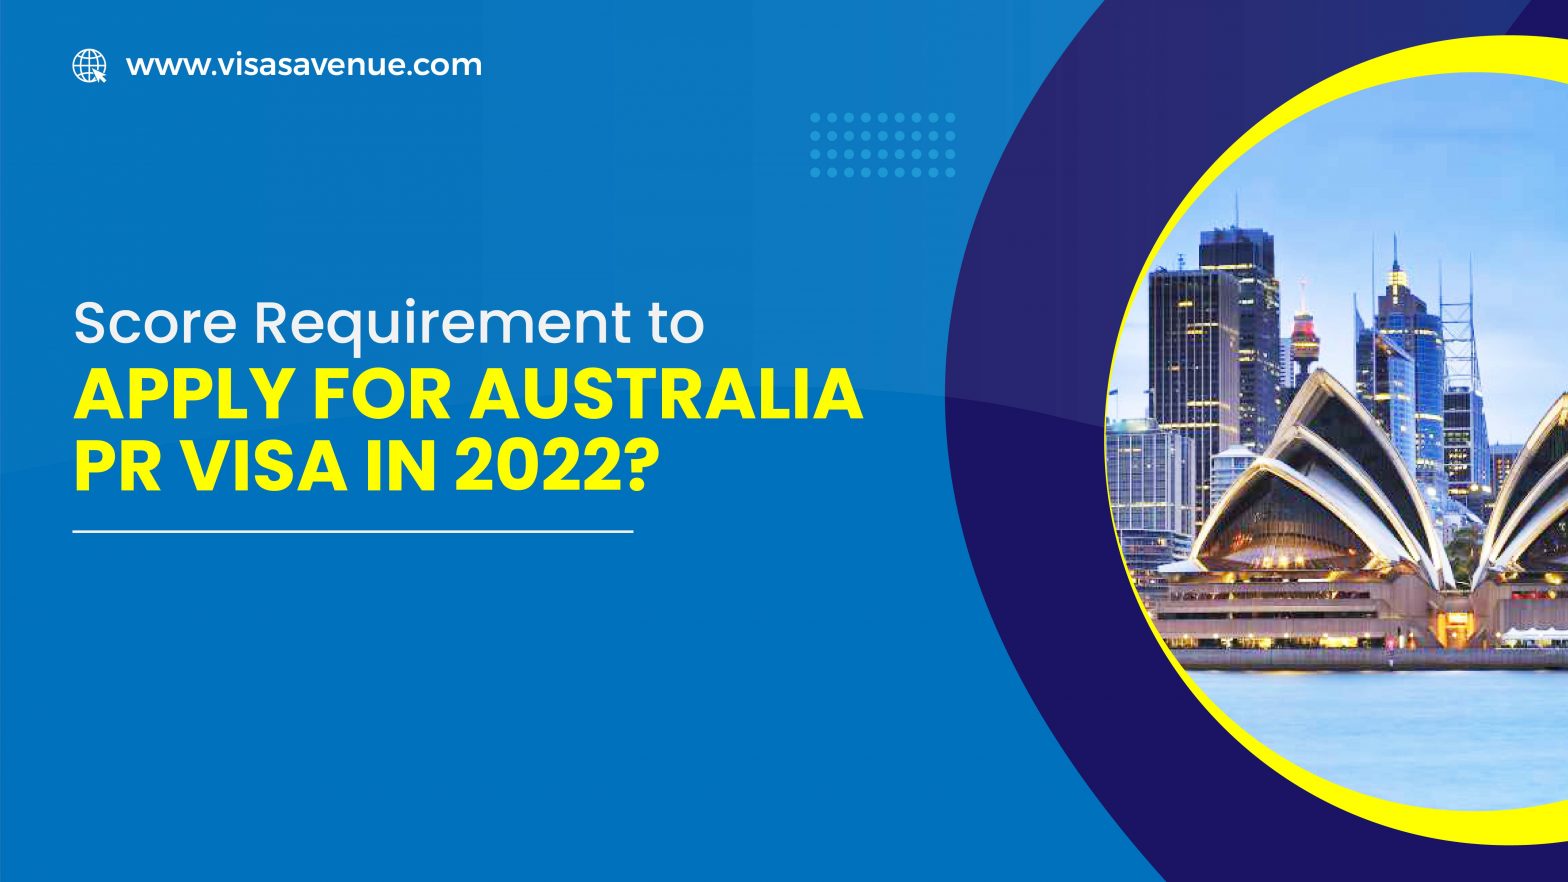 Score Requirement to Apply for Australia PR Visa in 2022